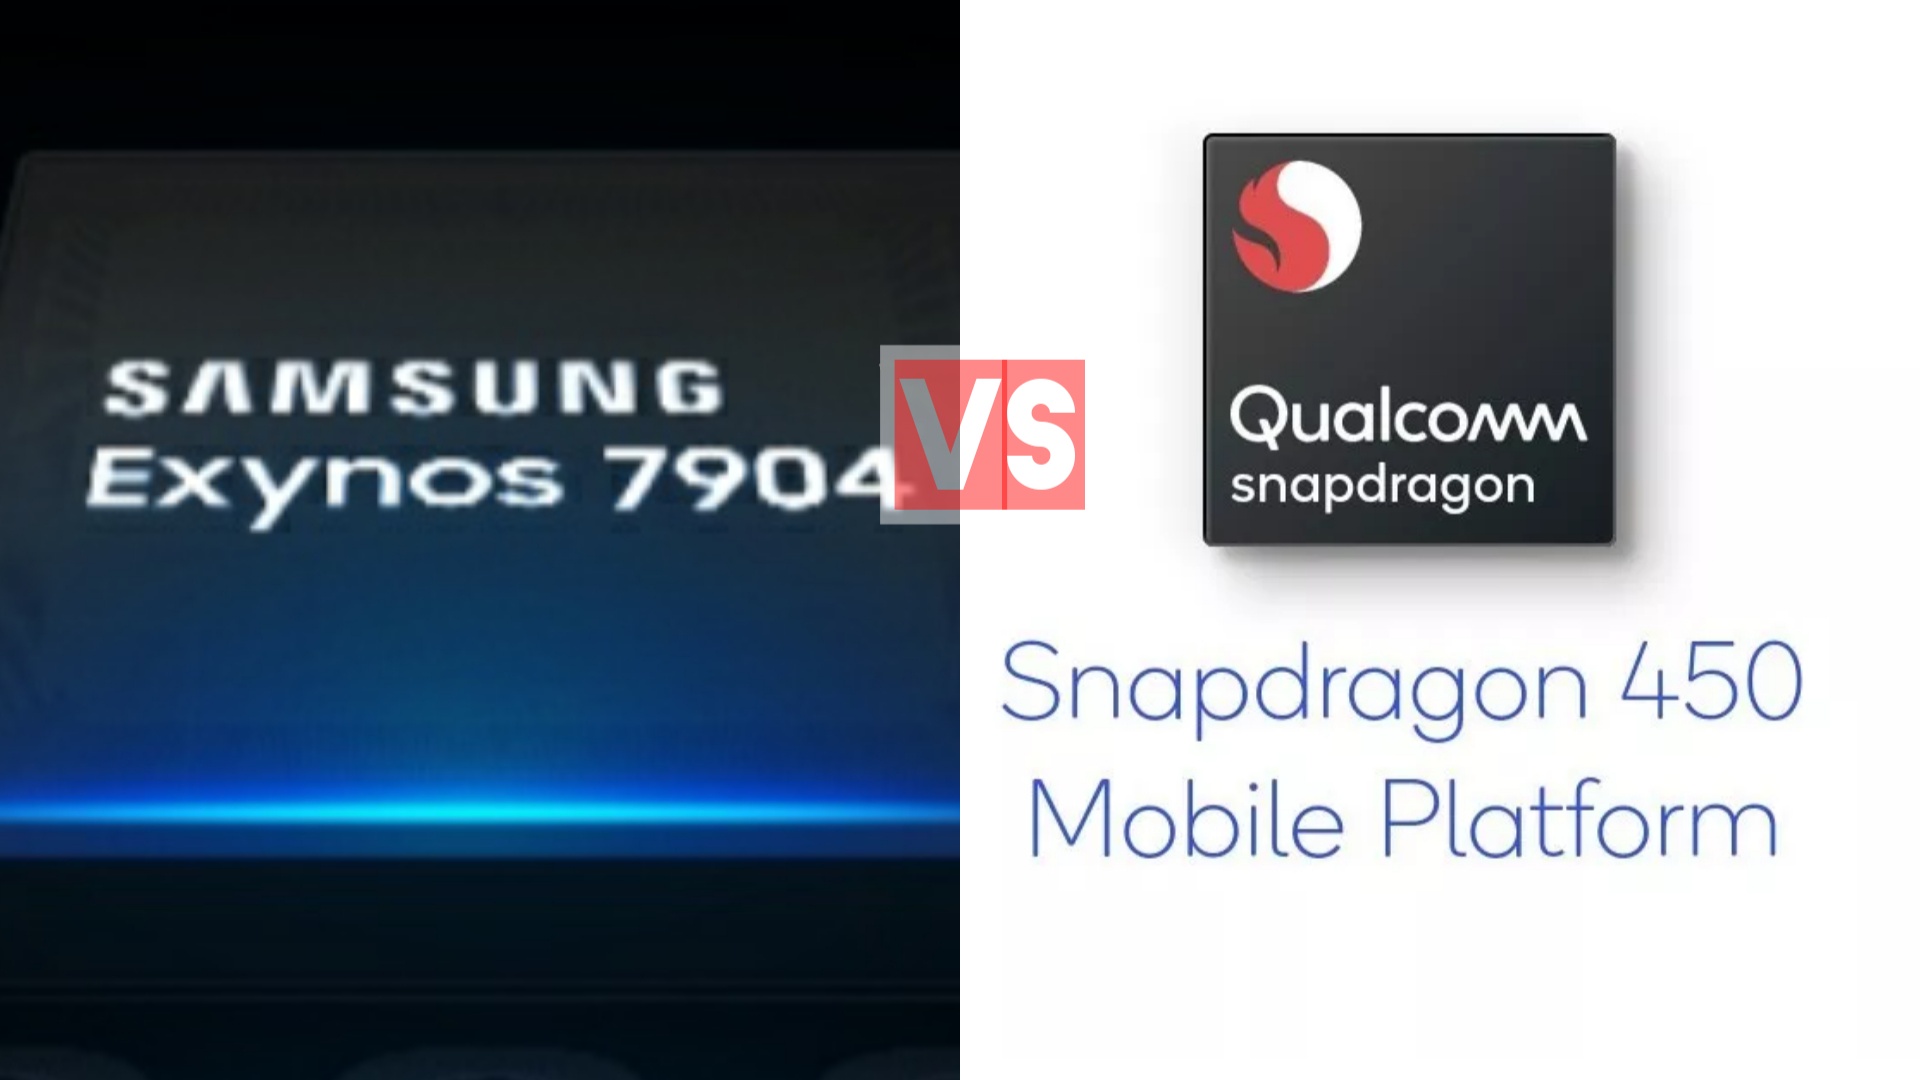 Samsung Exynos 7904 Vs Qualcomm Snapdragon 450